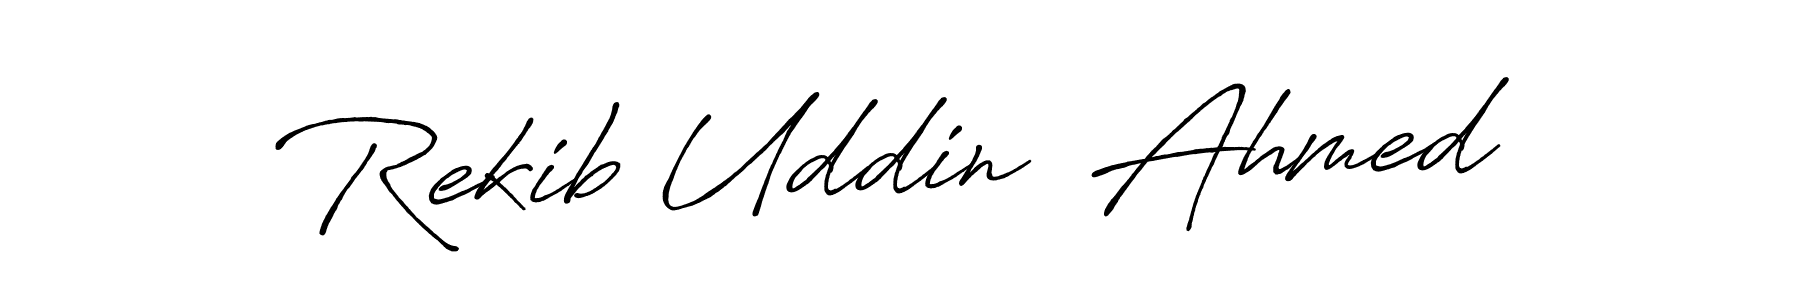 Make a beautiful signature design for name Rekib Uddin  Ahmed. Use this online signature maker to create a handwritten signature for free. Rekib Uddin  Ahmed signature style 7 images and pictures png